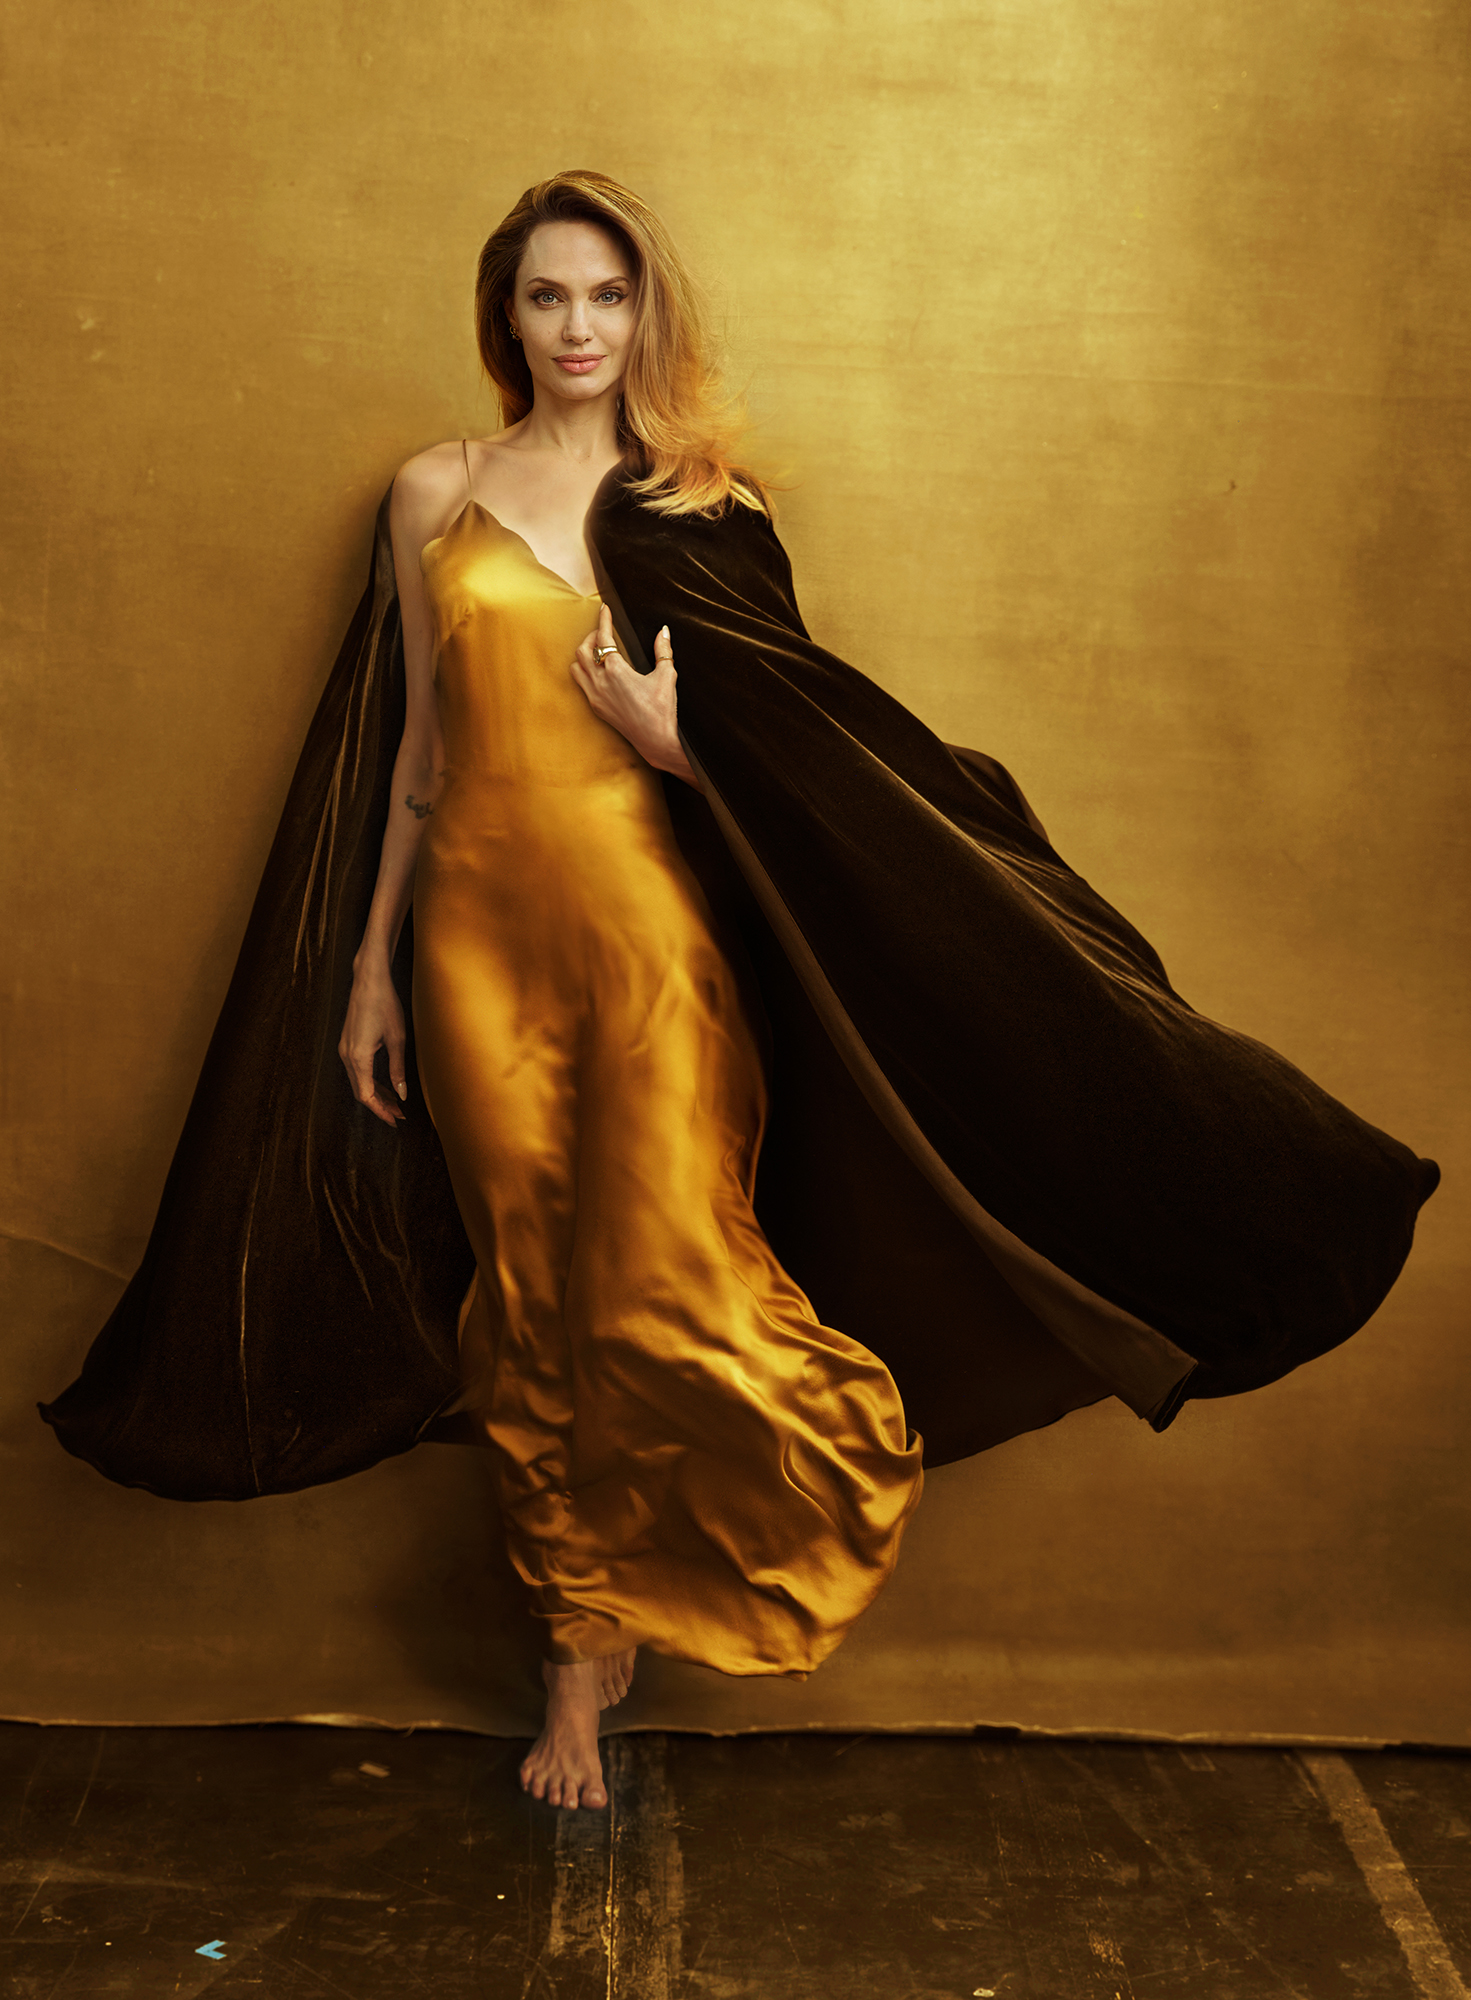 Louis Vuitton Print Ad with Angelina Jolie, Louis Vuitton Magazine